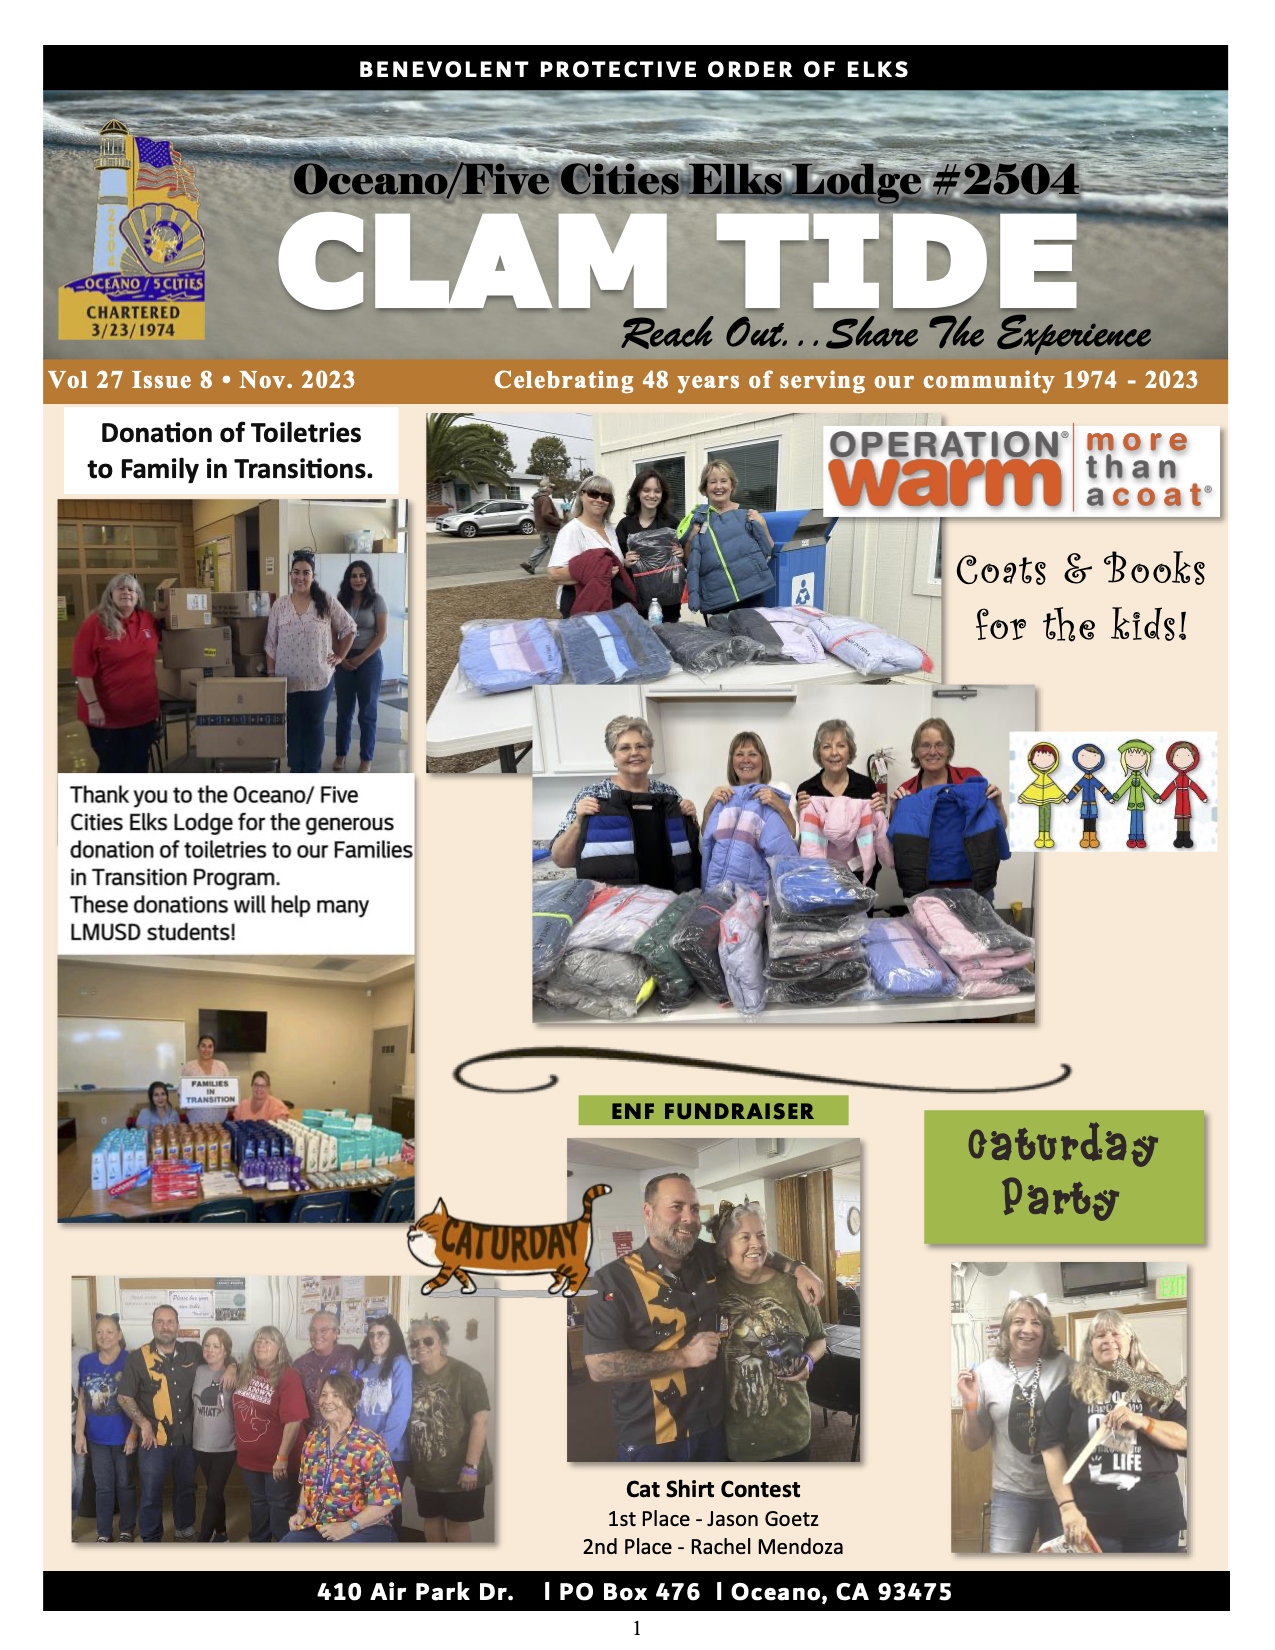 Clam Tide Newsletter - Oceano Elks 2504